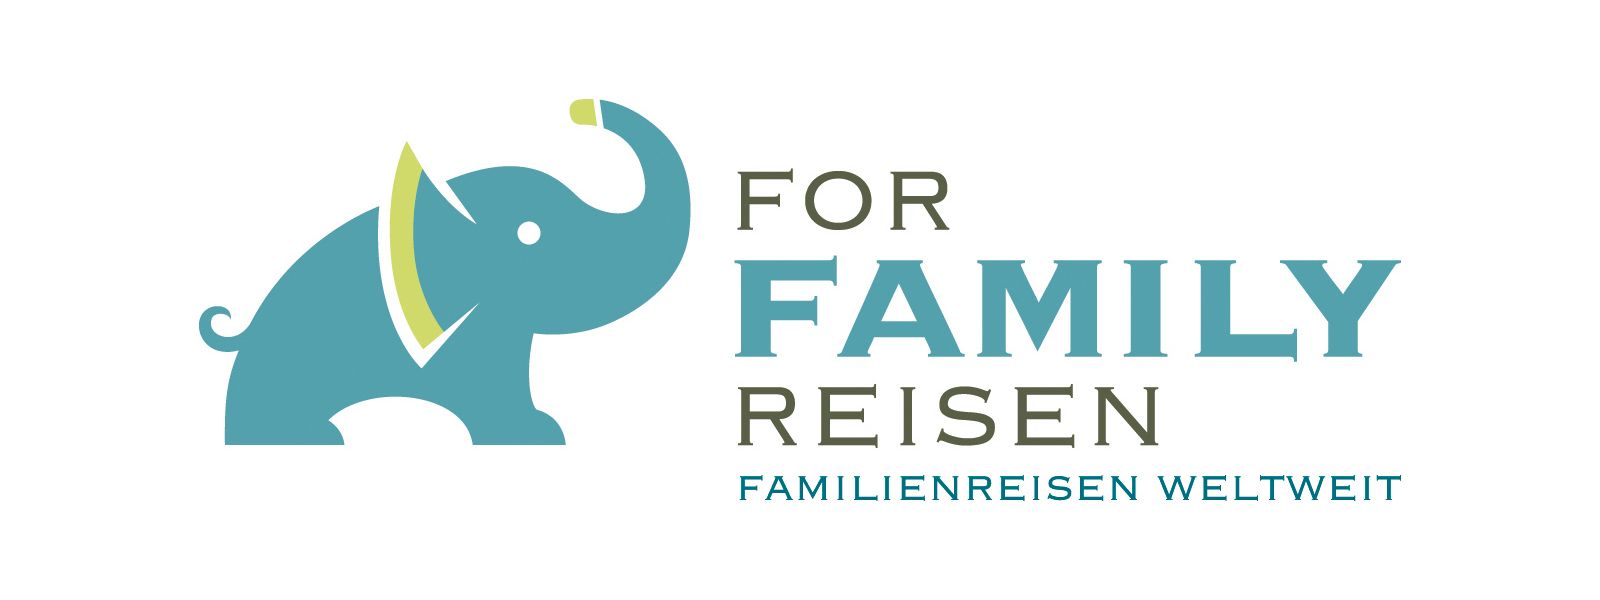 Neue Fernreisen für Familien in 2014 - For Family Reisen